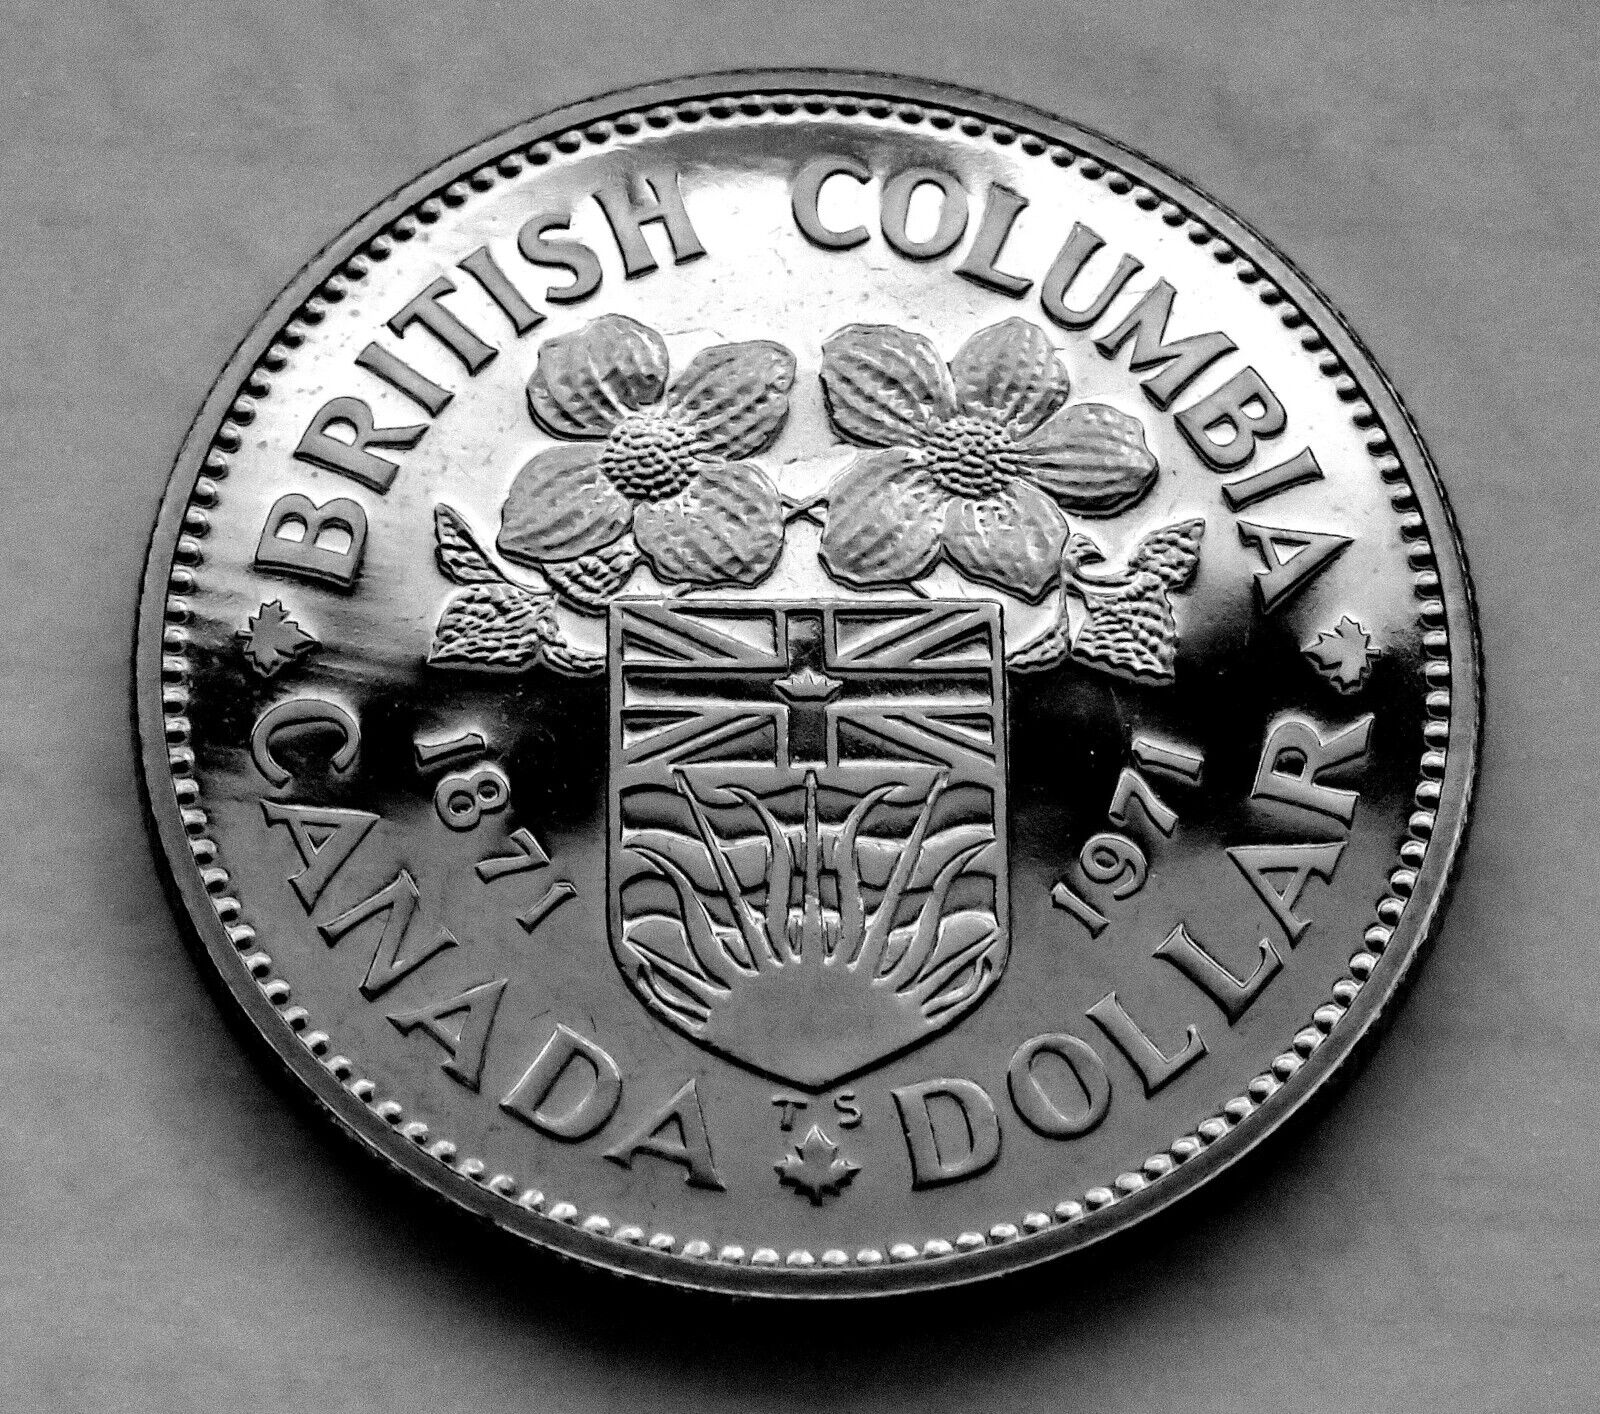 Canada 1871-1971 Proof-Like British Columbia Centennial Nickel Dollar